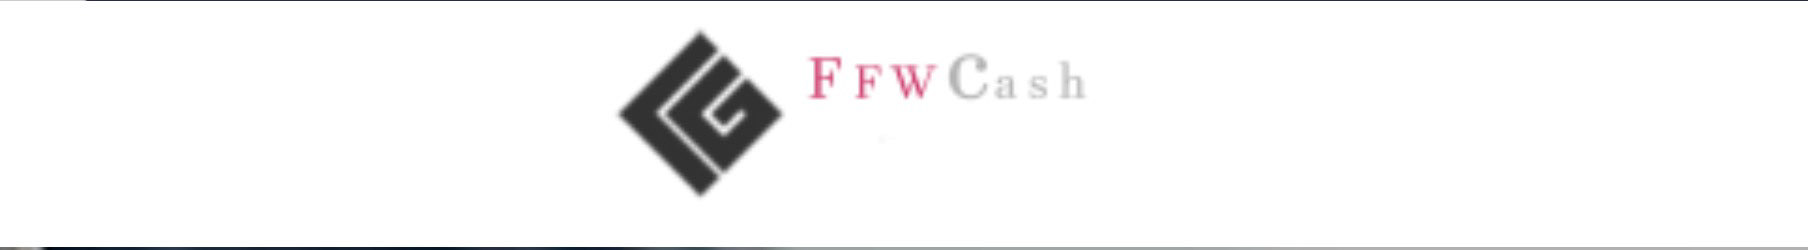 Ffwcash RO's profile banner